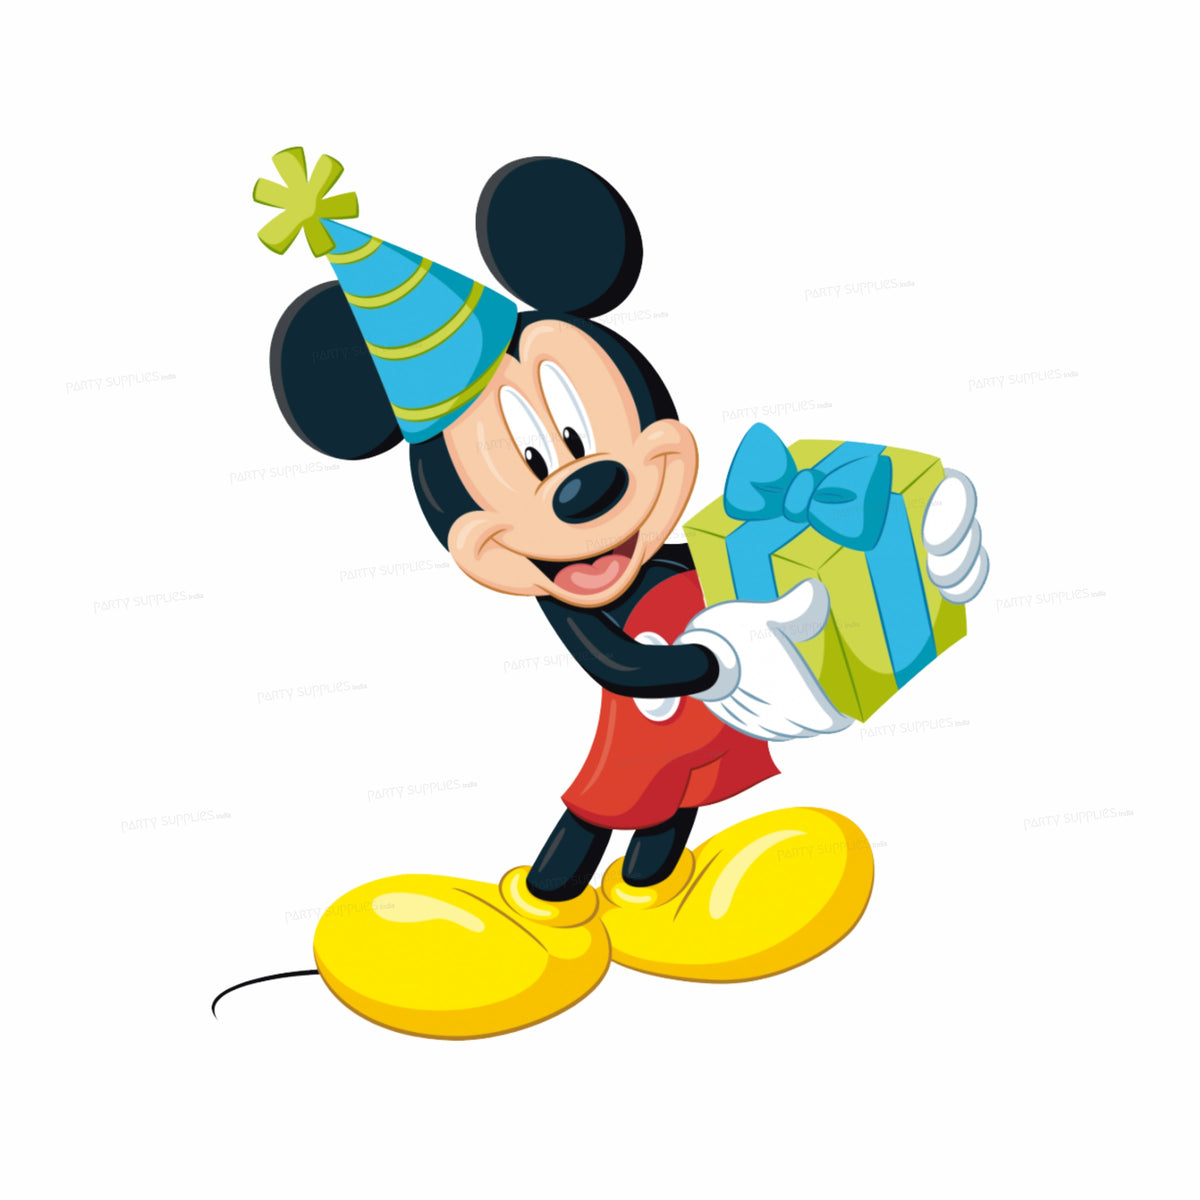 PSI Mickey Mouse Cutout - 10